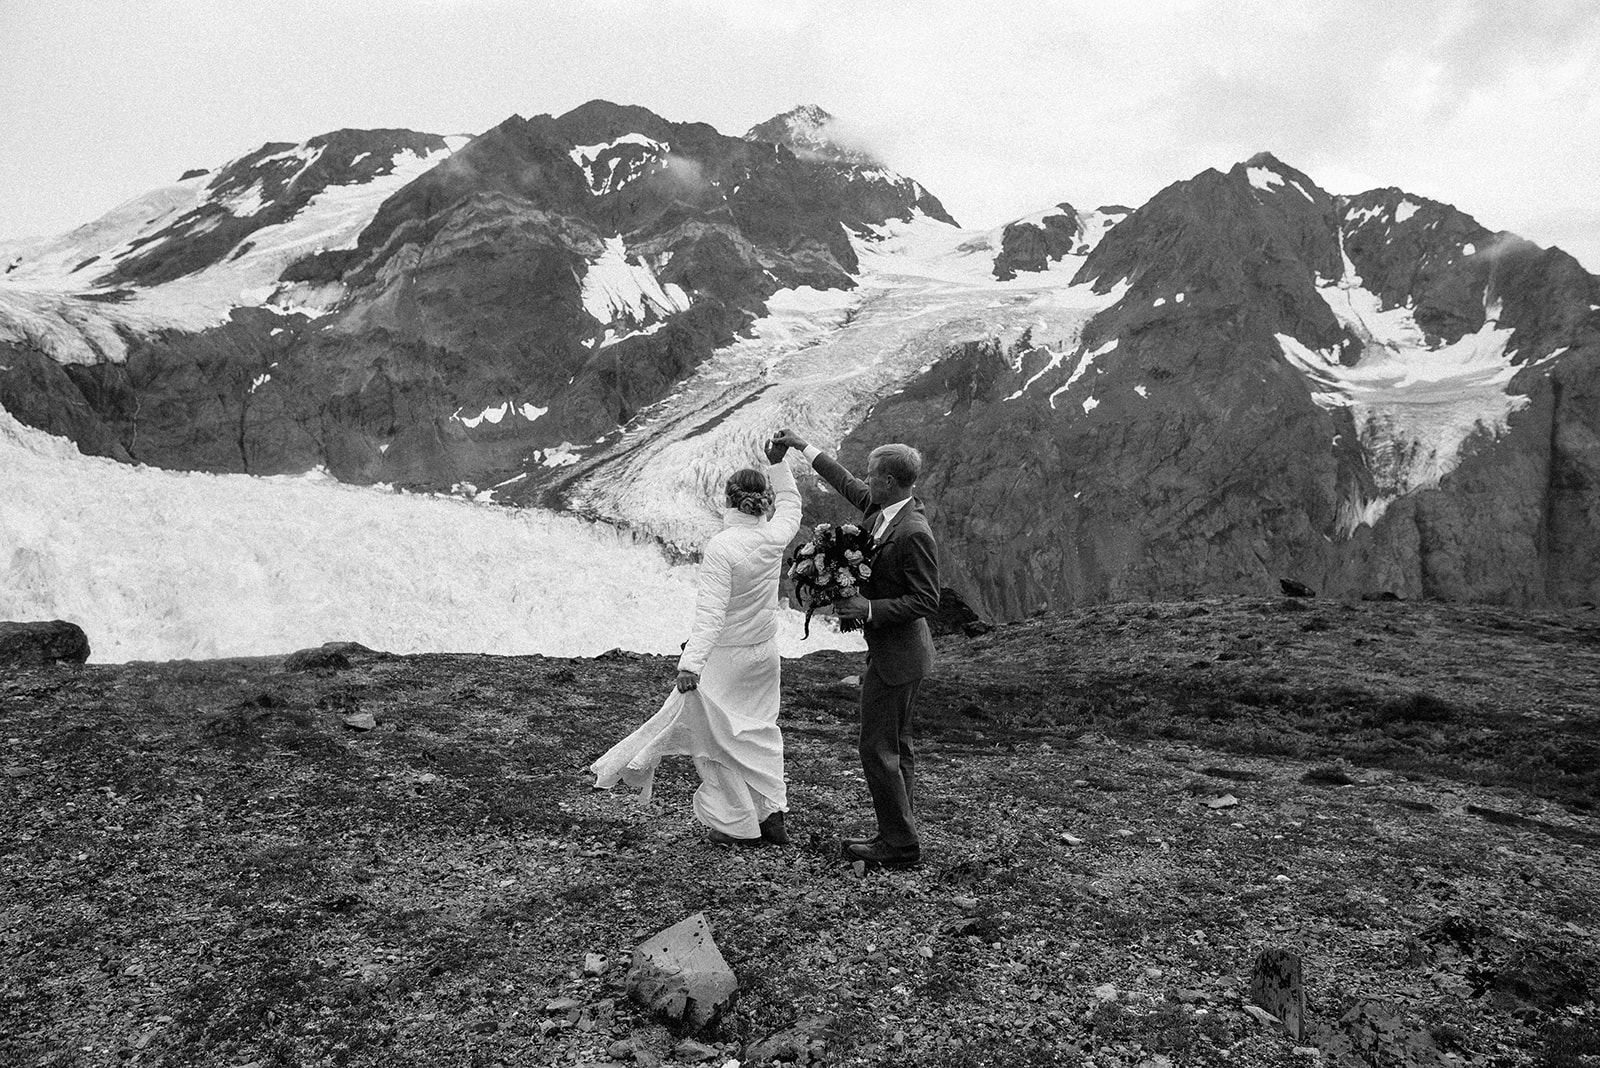 advenurous-editorial-elopement-lake-george-alaska-photography-zoya-dawn